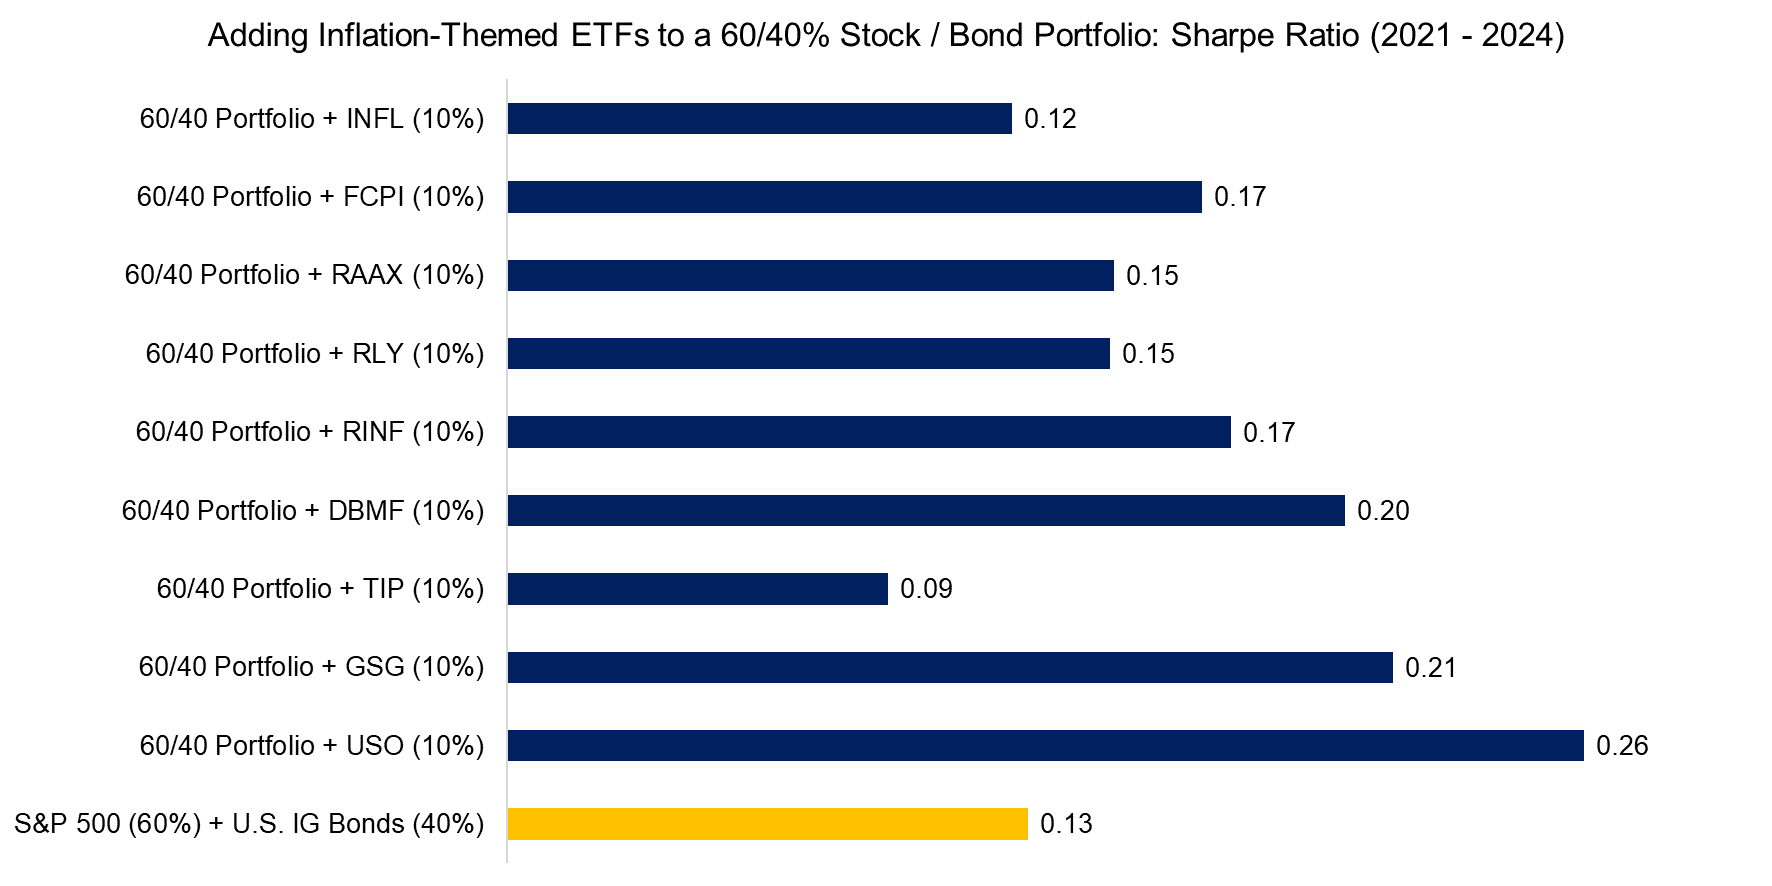 Adding Inflation-Themed ETFs to a 6040% Stock Bond Portfolio Sharpe Ratio (2021 - 2024)